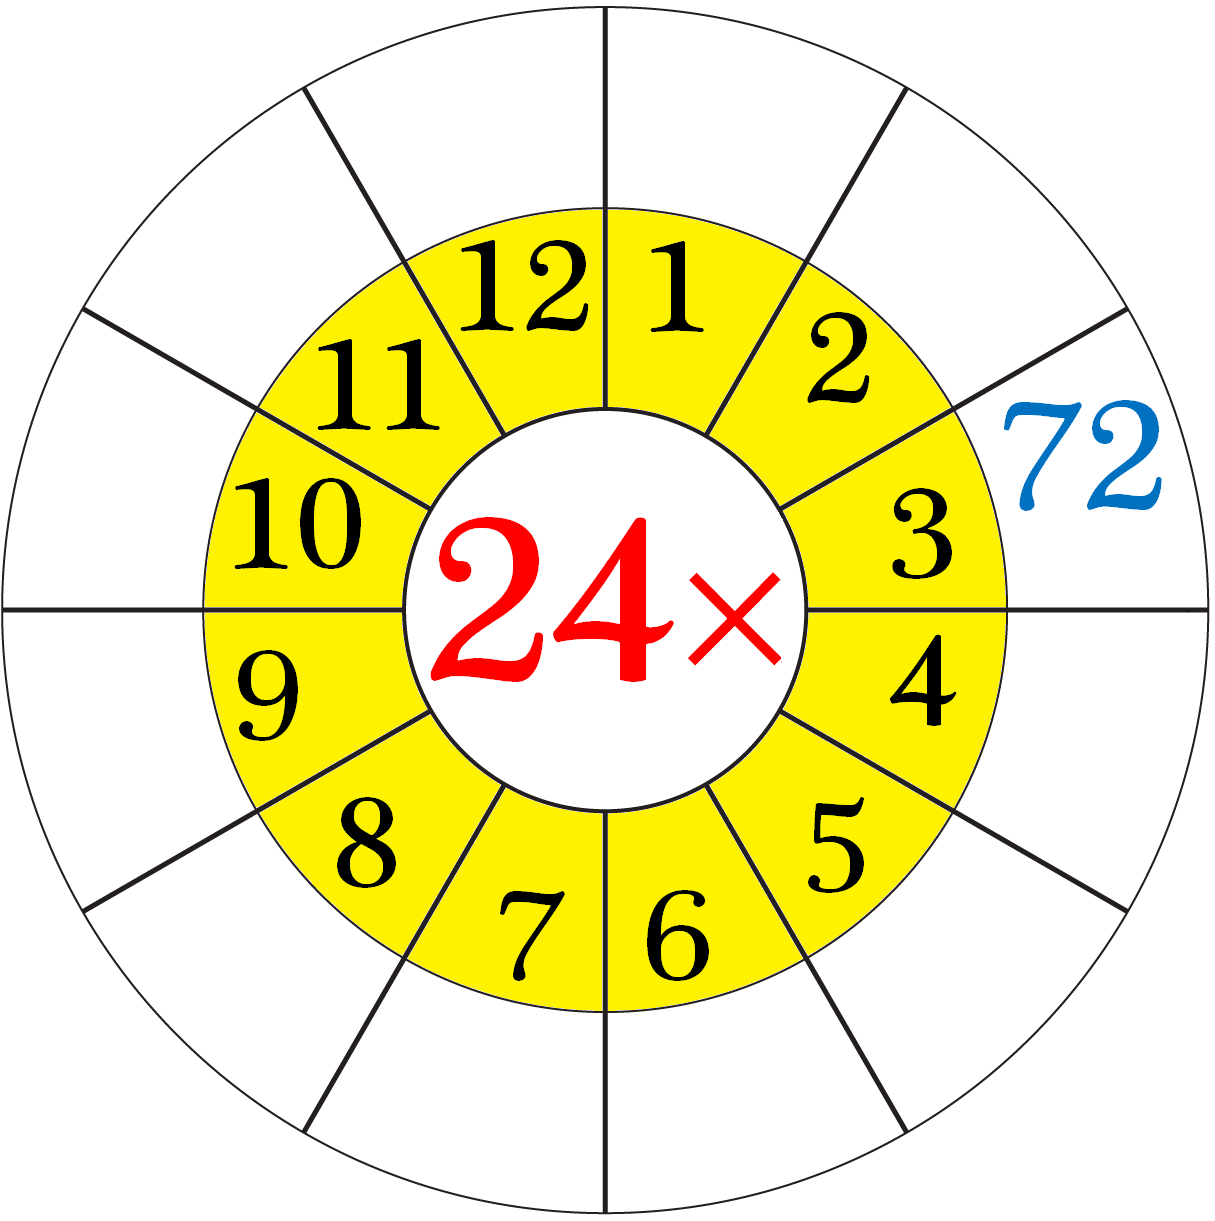 Worksheet on Multiplication Table of 24